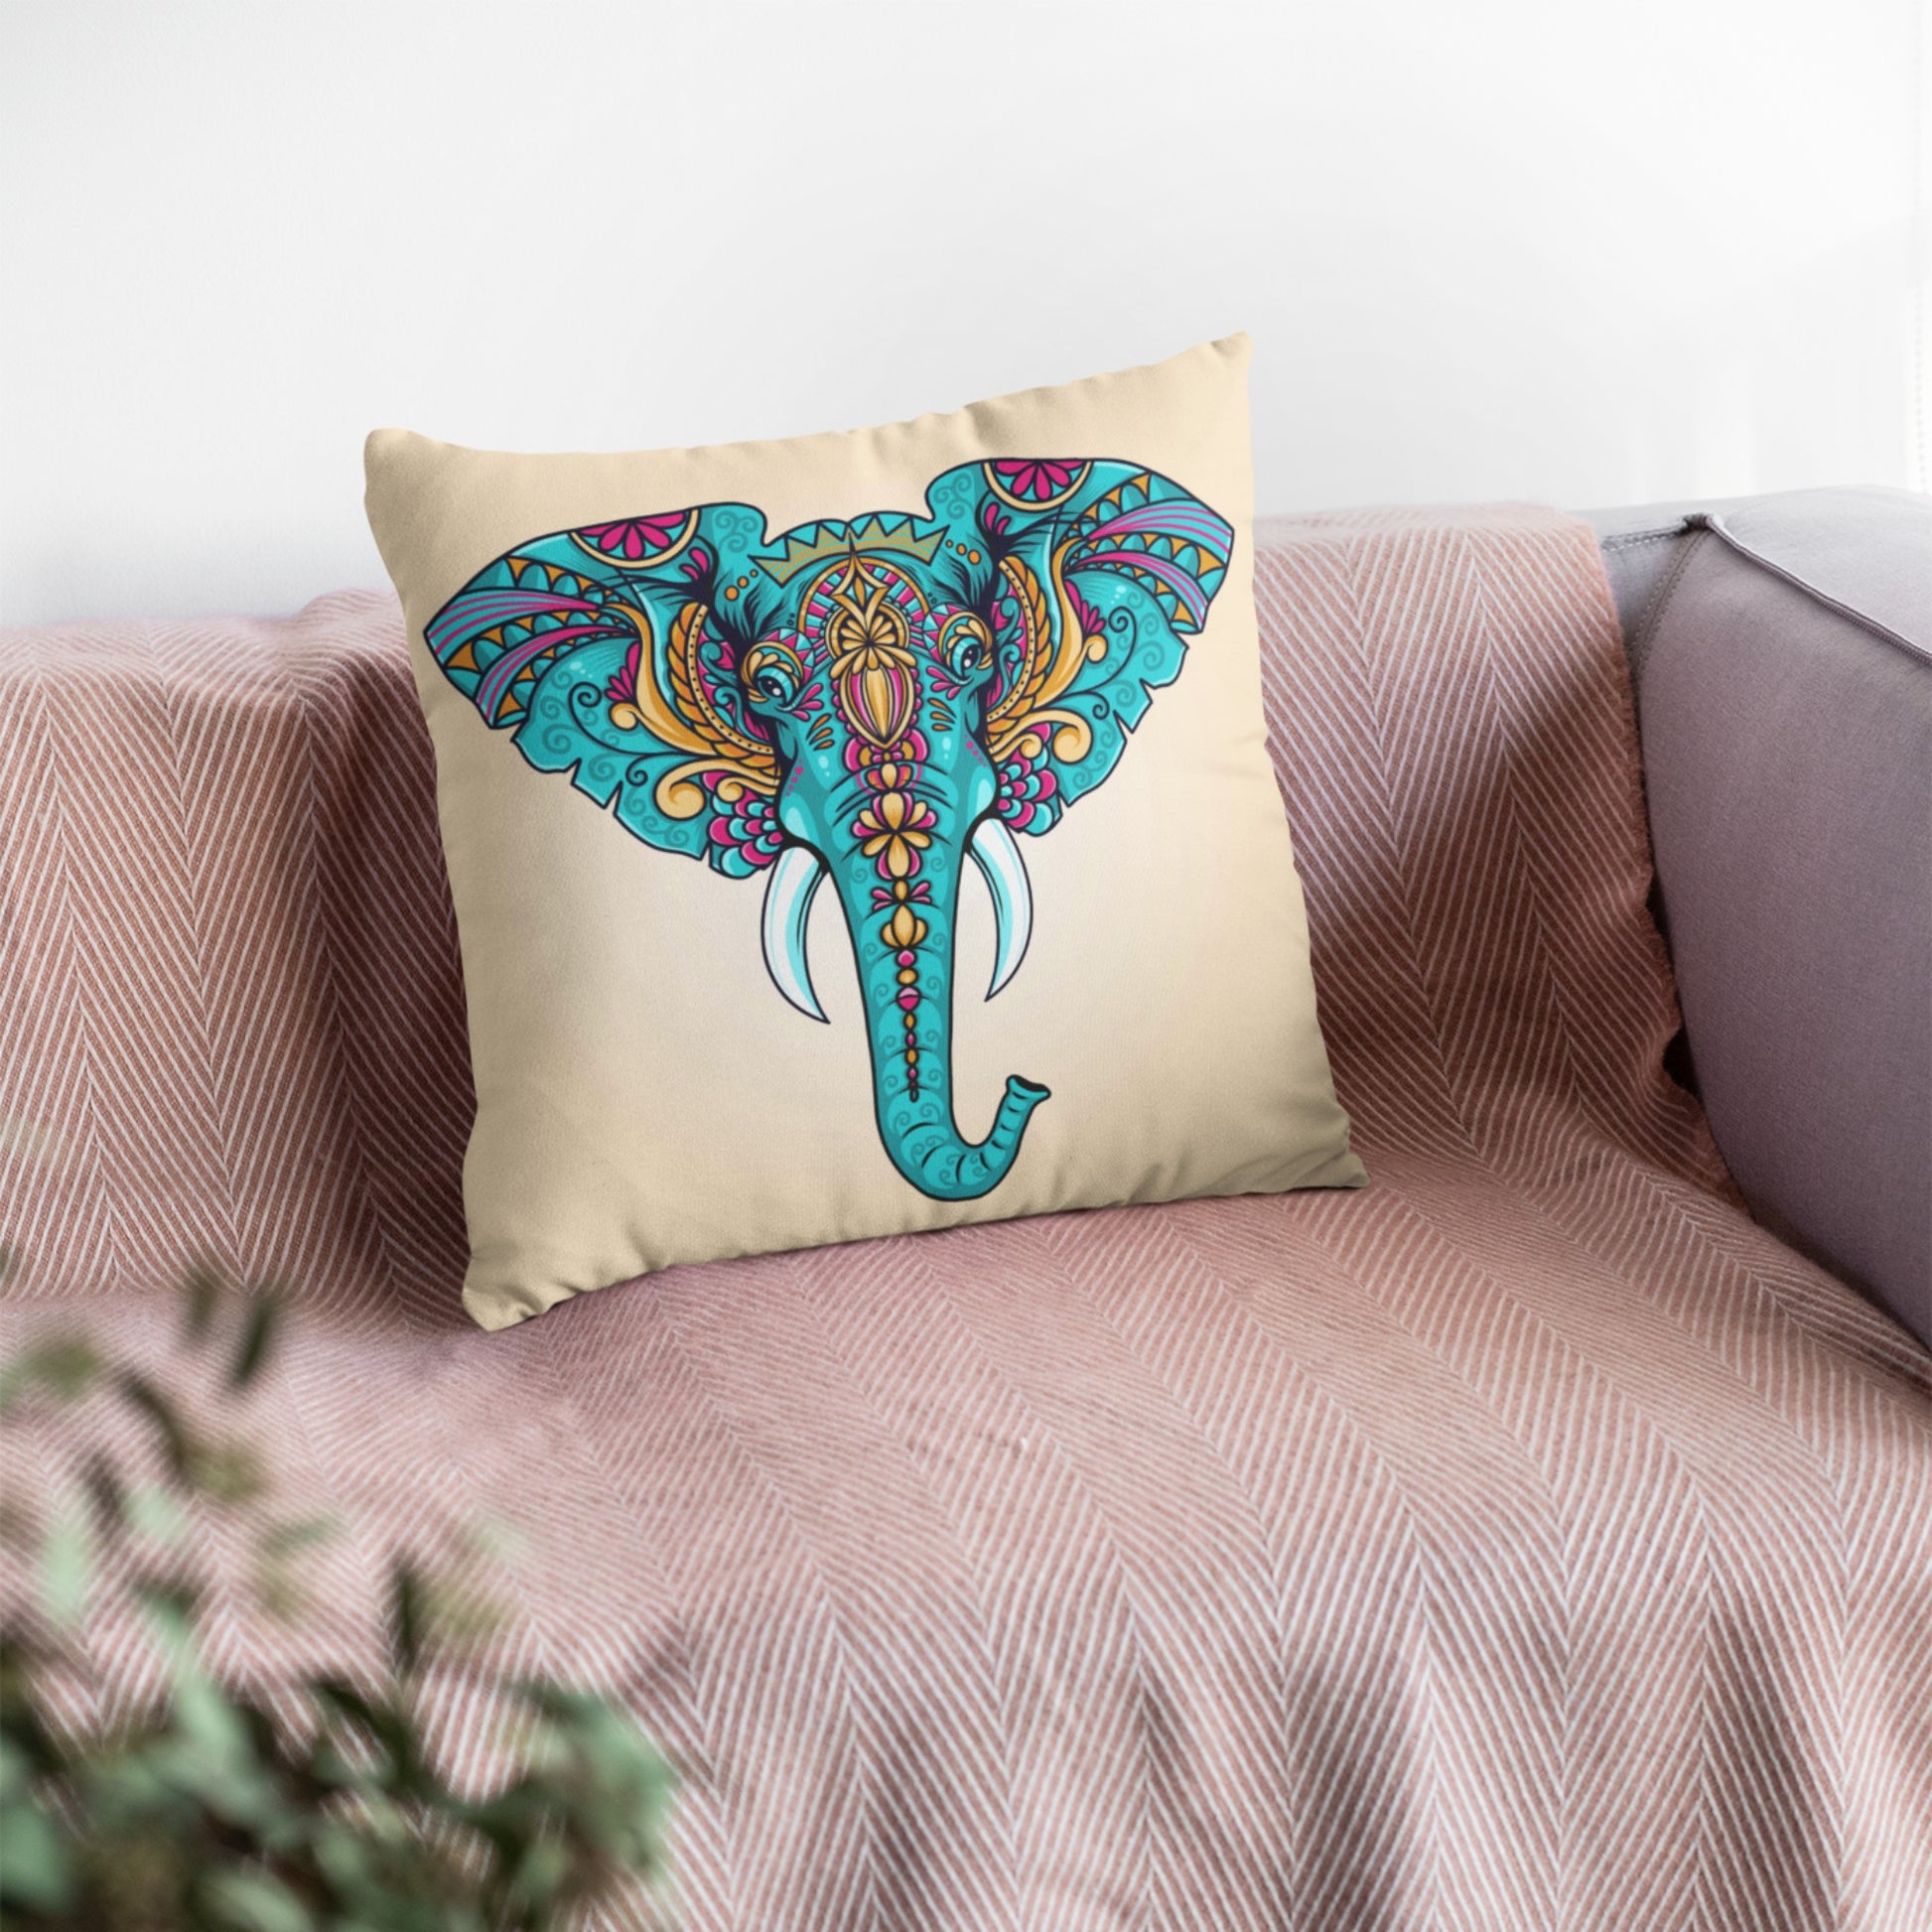 Homeezone's Blue Bohemian Elephant Pillow